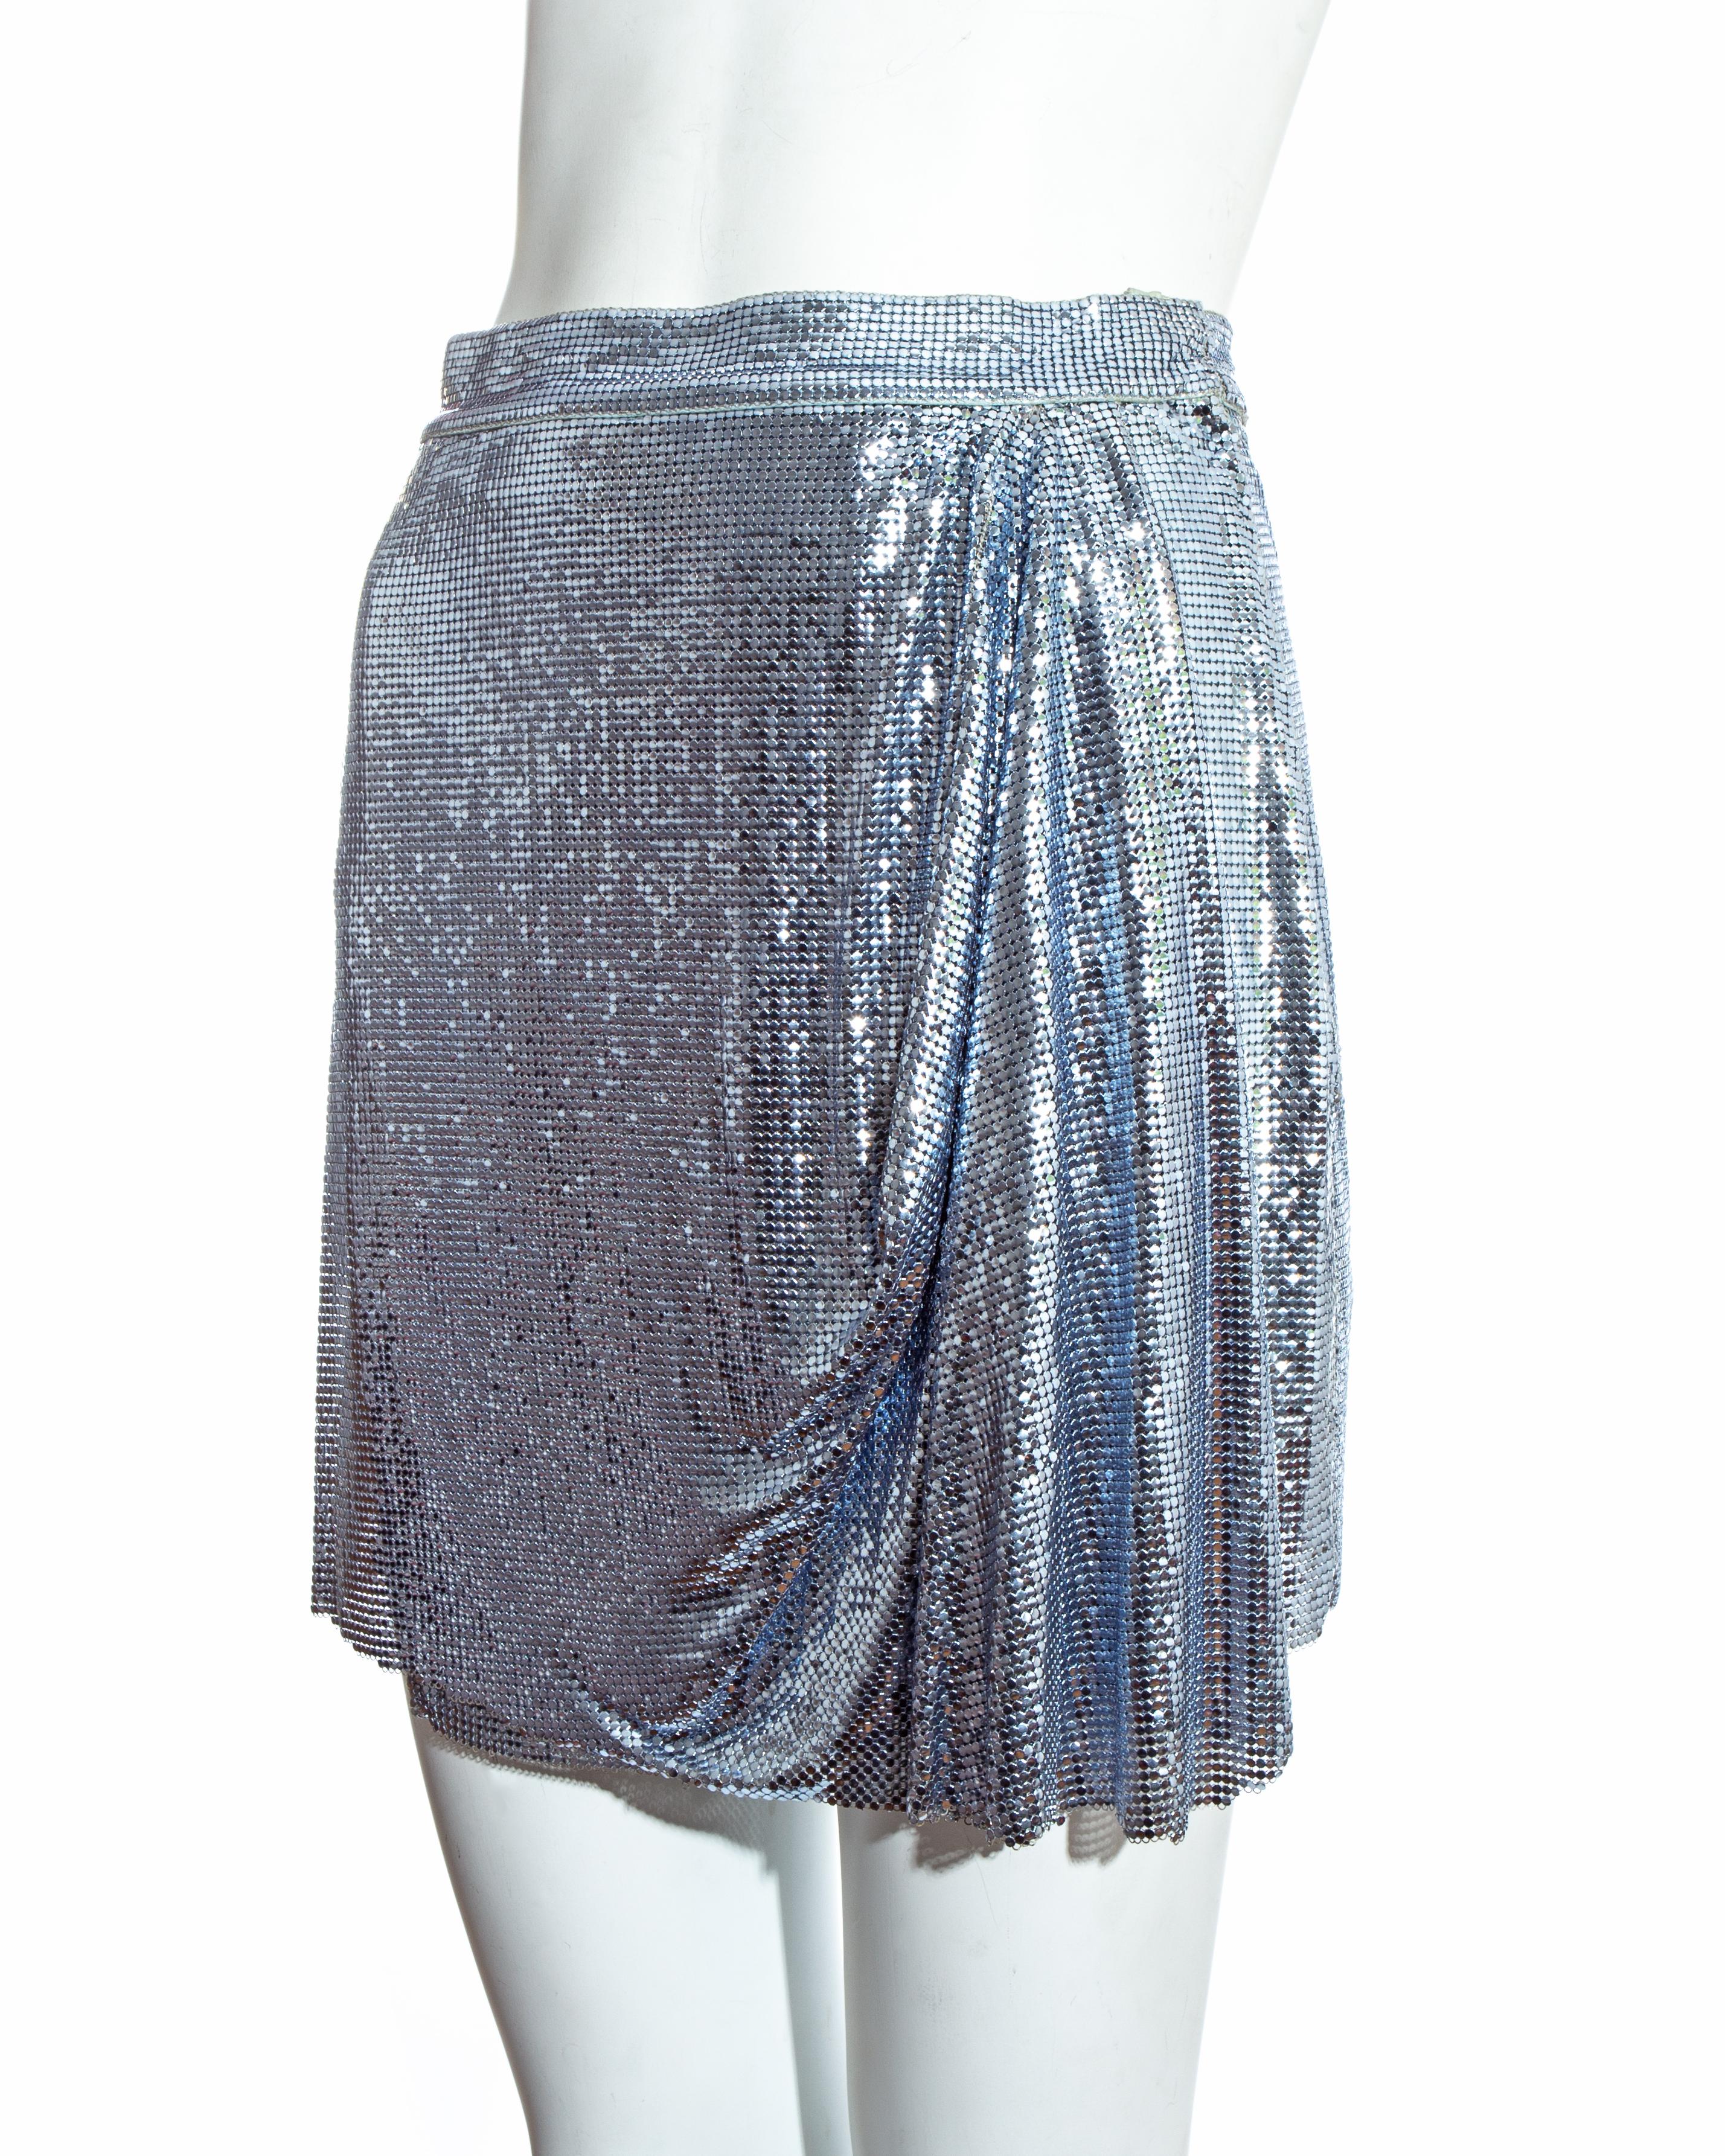 Gianni Versace metallic blue Oroton chainmail draped evening mini skirt. 

Fall-Winter 1994